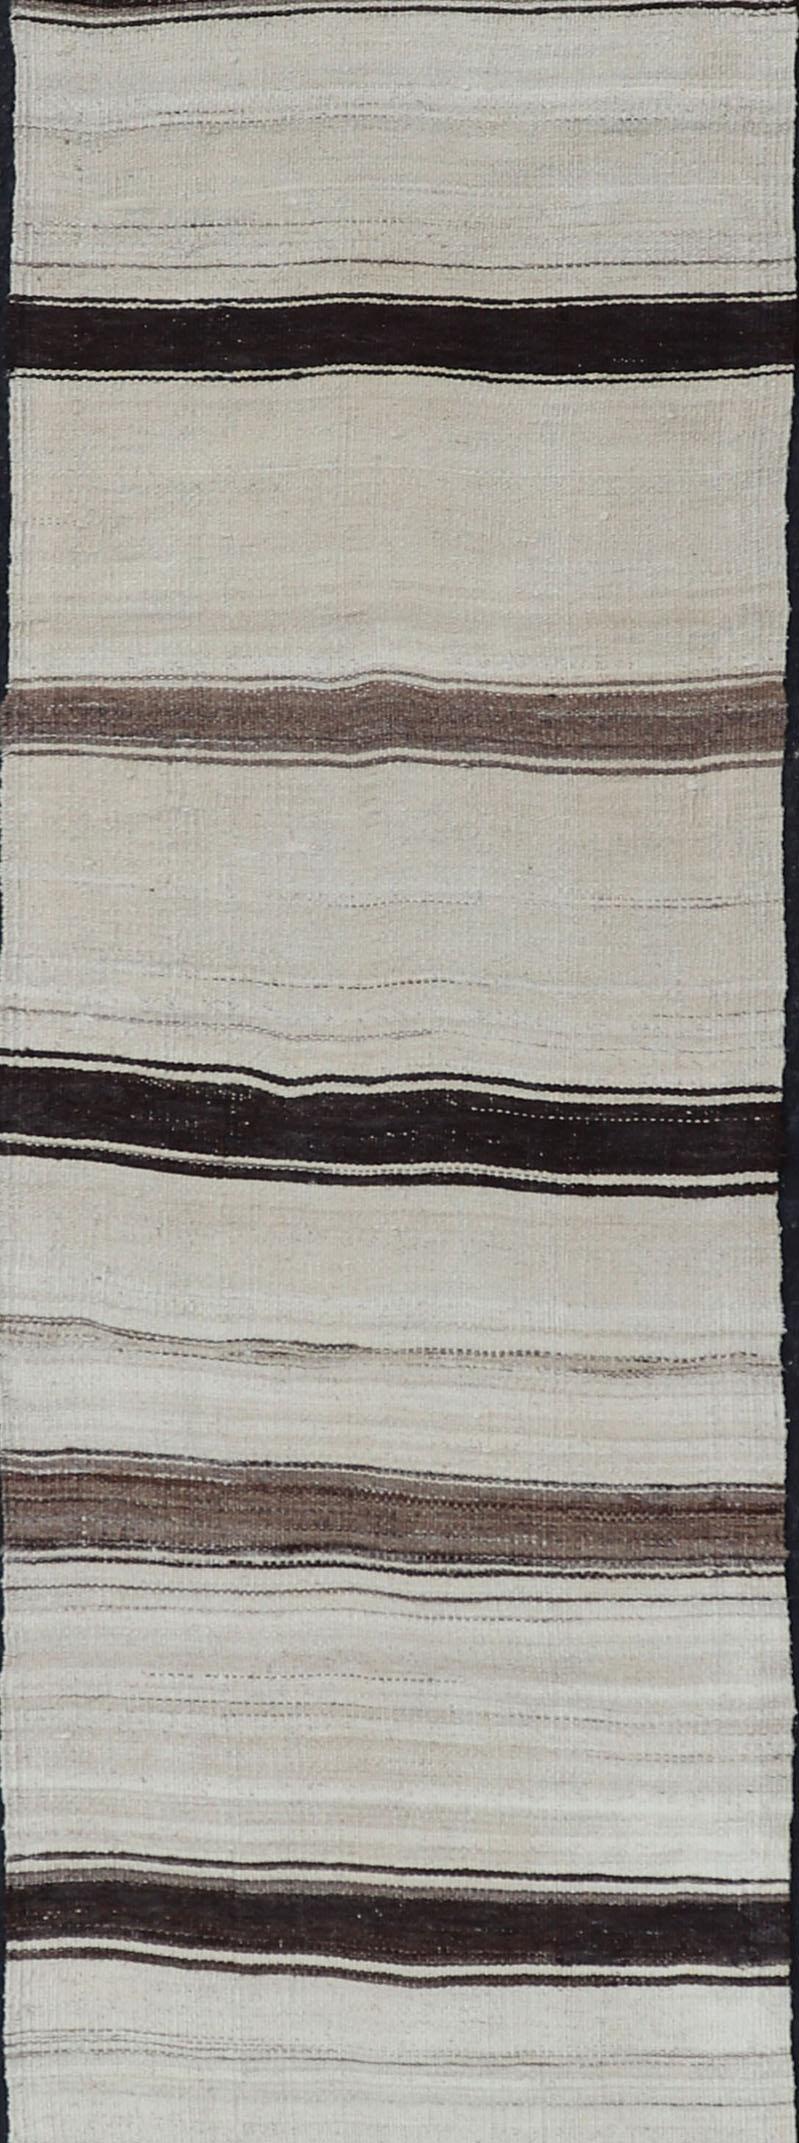 Vintage Kilim runner, Narrow Kilim, minimalist design striped kilim, Vintage kilim runner Keivan Woven Arts rug EN-P13442 , country of origin / type: Turkey / Kilim, circa Mid-20th Century.

Measures: 2'1 x 12'0.